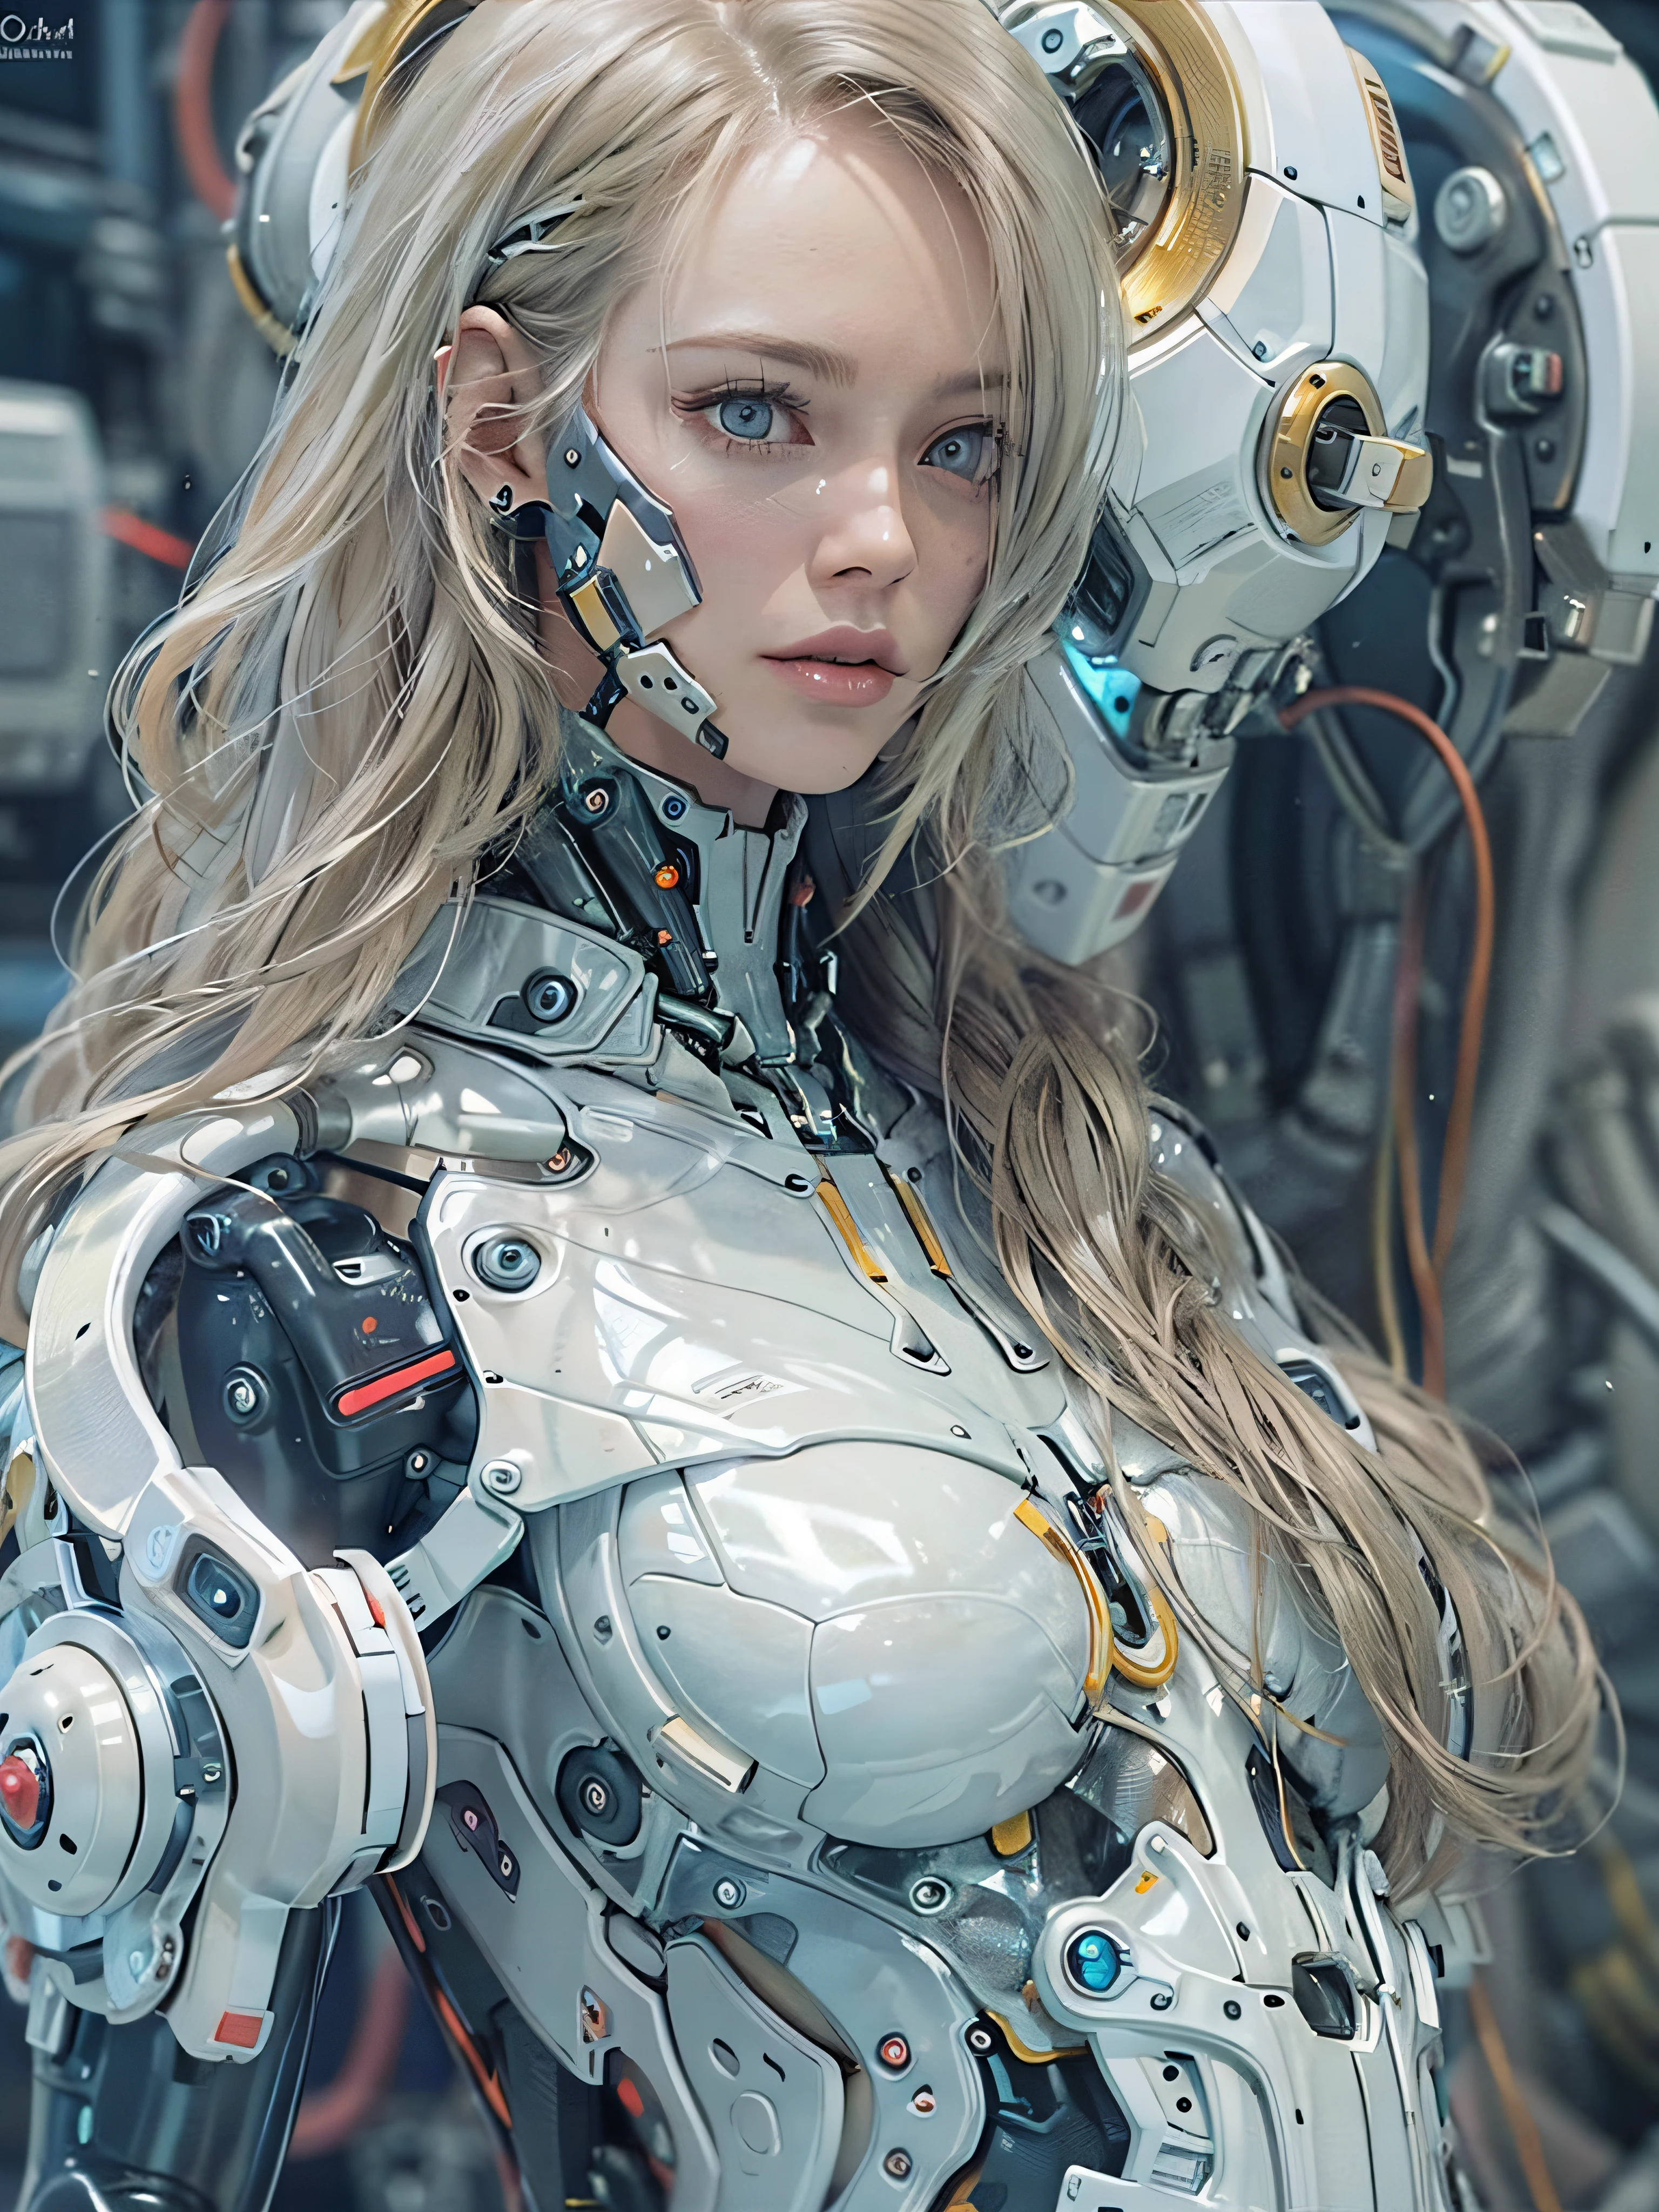 Complex 3d rendering porcelain female cyborg ultra 細節, 1個女孩, 蓬鬆的金髮, 長髮, 小腰, (自然的皮膚紋理, 實際的 eye 細節s: 1.2), 機器人零件, 美麗柔和的光線, 邊緣光, vivid 細節s, 華麗的賽博龐克, hyper-實際的, 解剖的, 面部肌肉, 電纜線, 微晶片, 優雅美麗的背景, 辛烷渲染, 蘋果風格, 8K, 頂級品質, 傑作, 插圖, 非常精緻美麗, CG, 统一, 壁紙, (實際的, photo實際的: 1.2), 驚人的, 細節, 傑作, 最好的品質, 官方藝術, highly 細節ed cg Unity 8k 壁紙, 荒谬至极, 性感機器人, 機械骨架, 安卓, 超現實主義, 末日荒原, (高科技義肢:1.2), 完美身材, 深藍色發光網絡容器, (闪亮的身体), (Very 闪亮的身体), 射頻KTR_泰克諾特雷克斯, 瑞爾機甲, 控制论的_無下巴, 机械零件, 控制论的s, AB_ 機器人